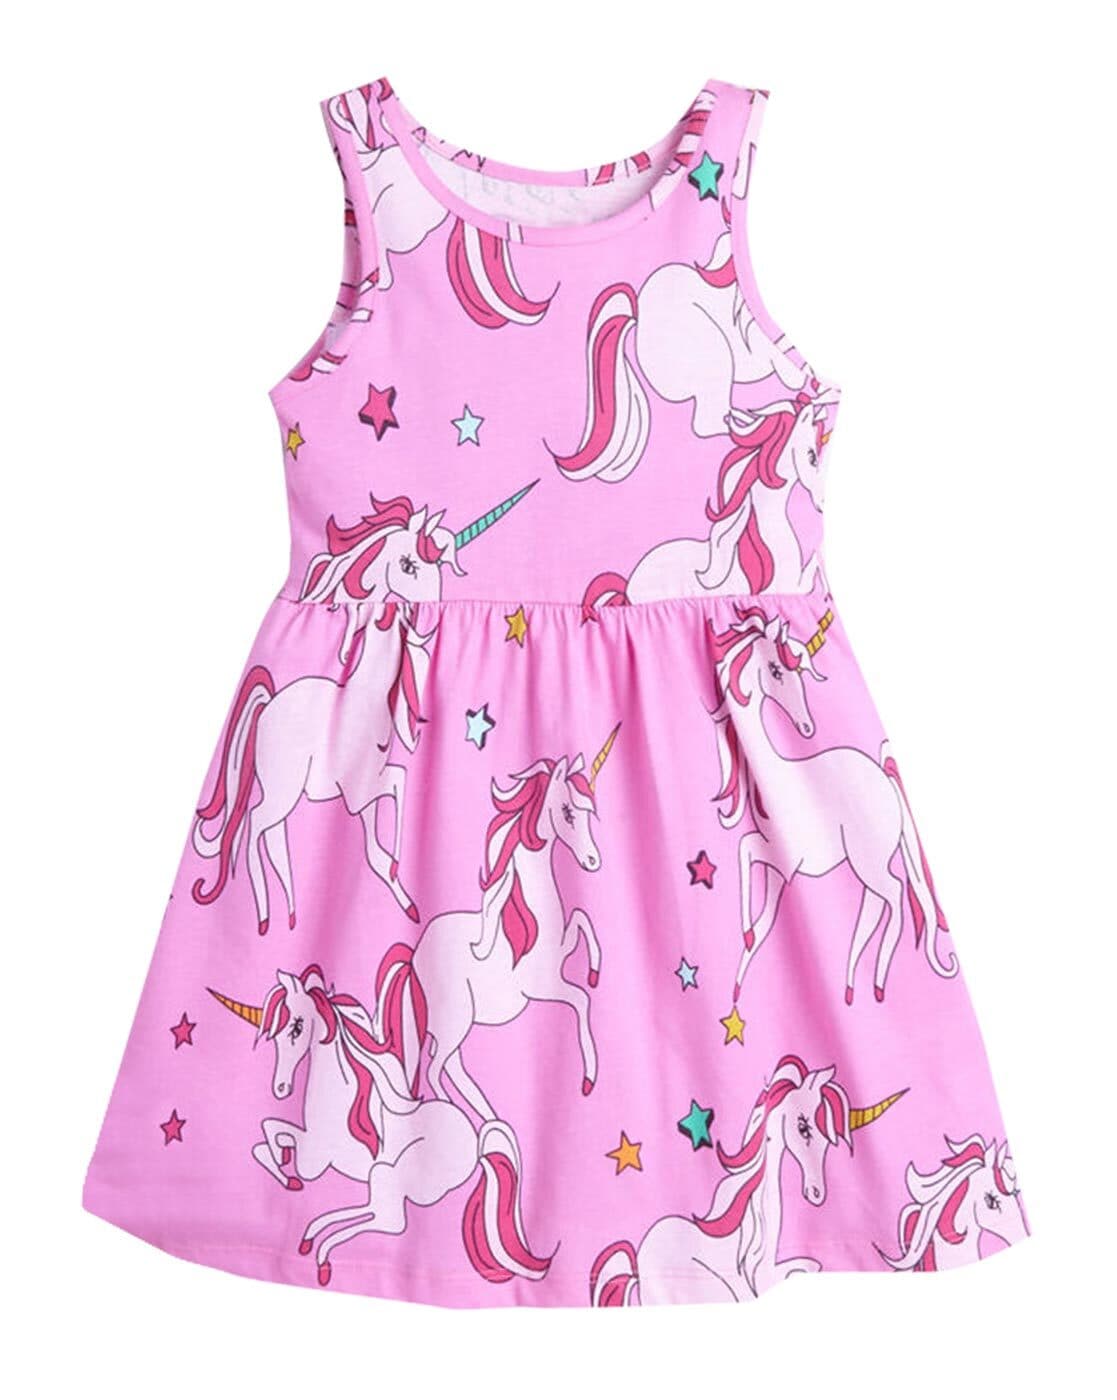 Shop Online Girls Multi Coloured Unicorn Print Party Dress at ₹1049